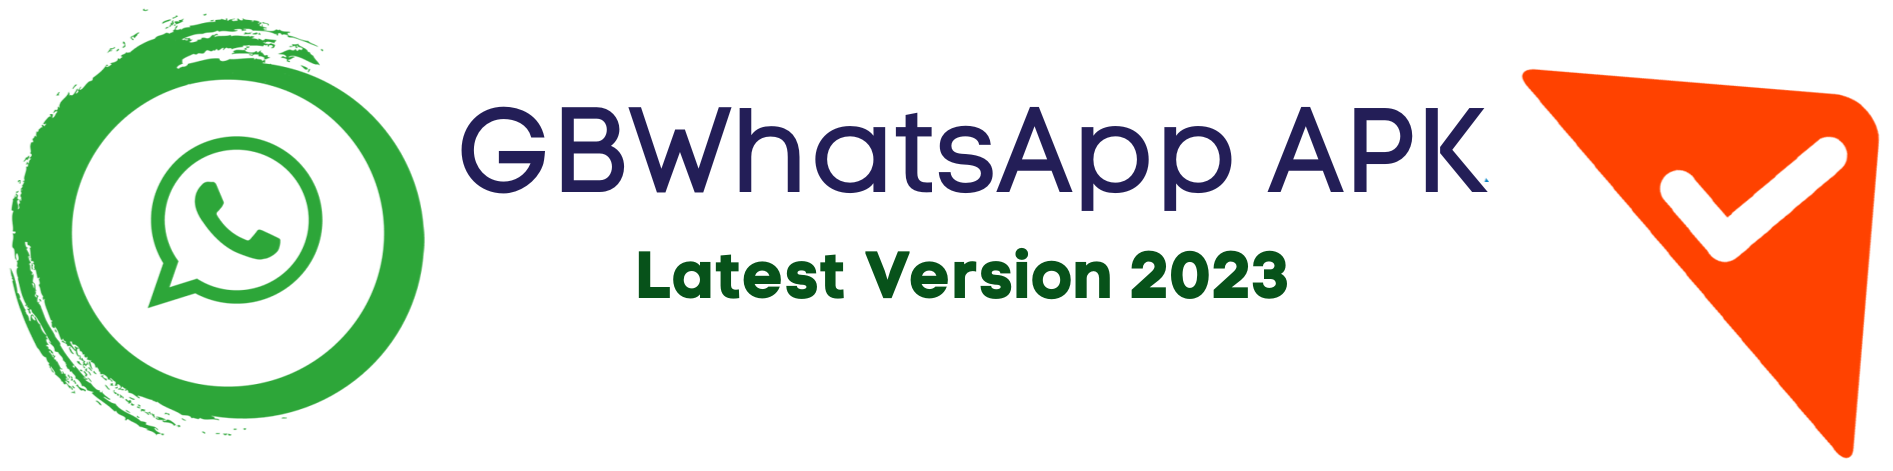 Gb Whatsapp Apk Download